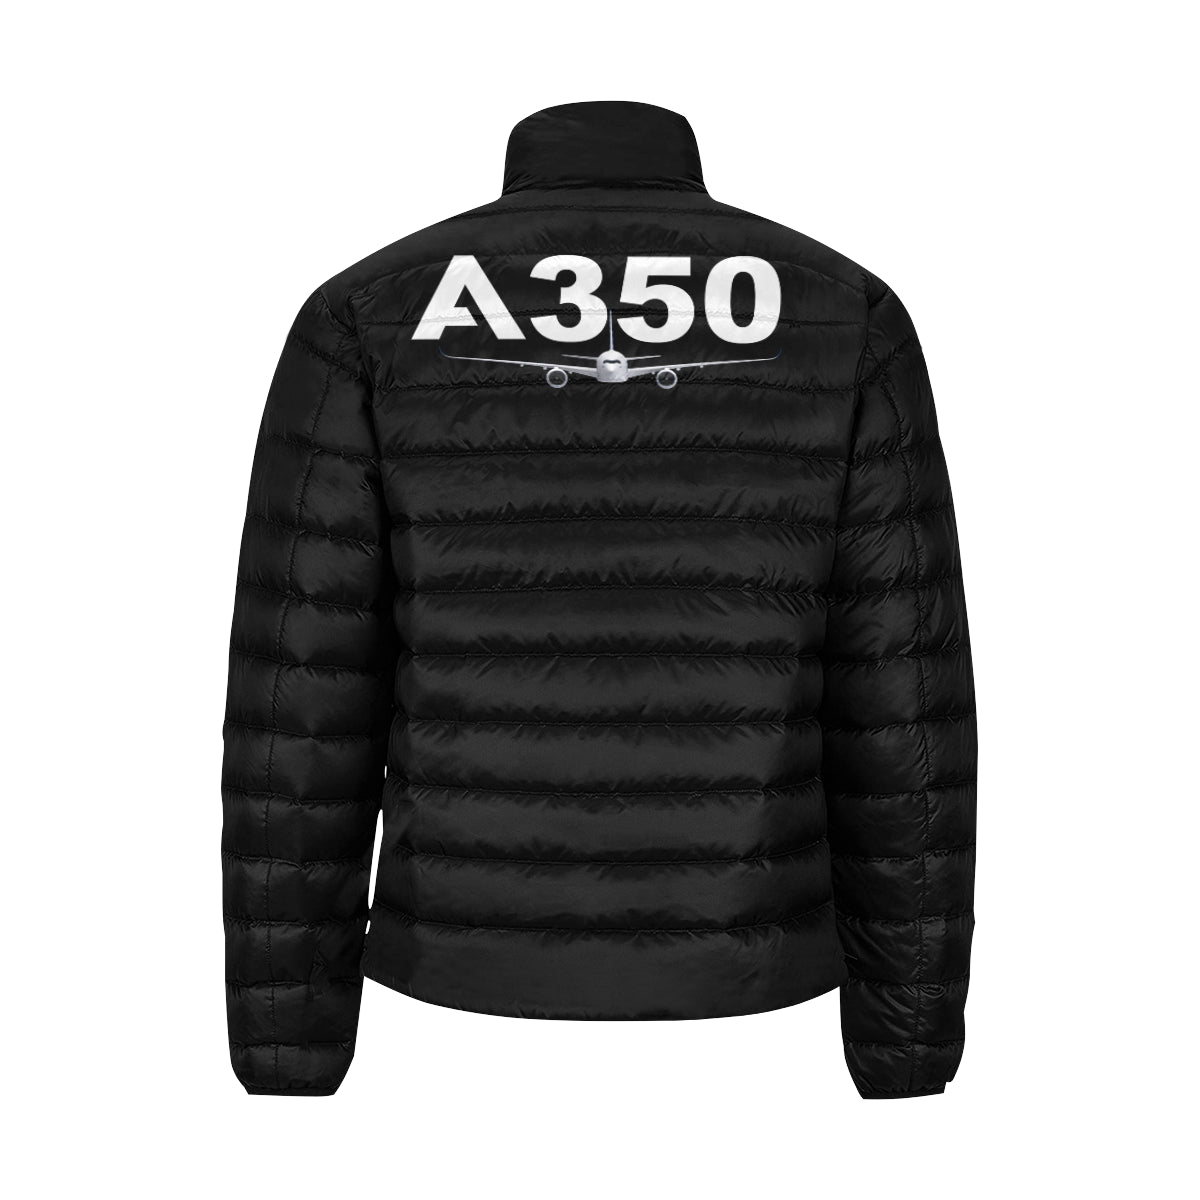 AIRBUS 350 Men's Stand Collar Padded Jacket e-joyer